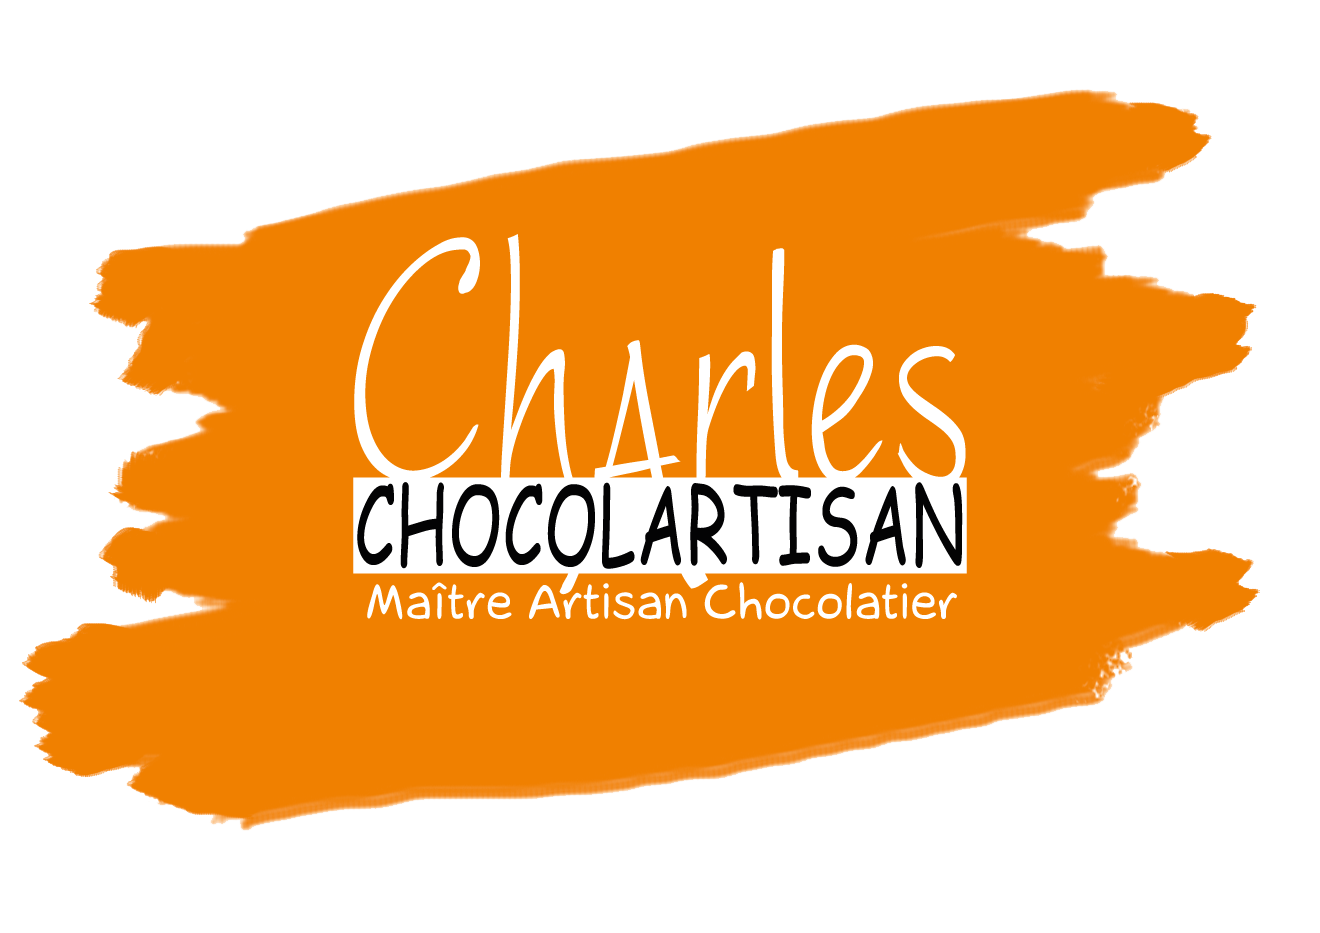 Charles Chocolartisan